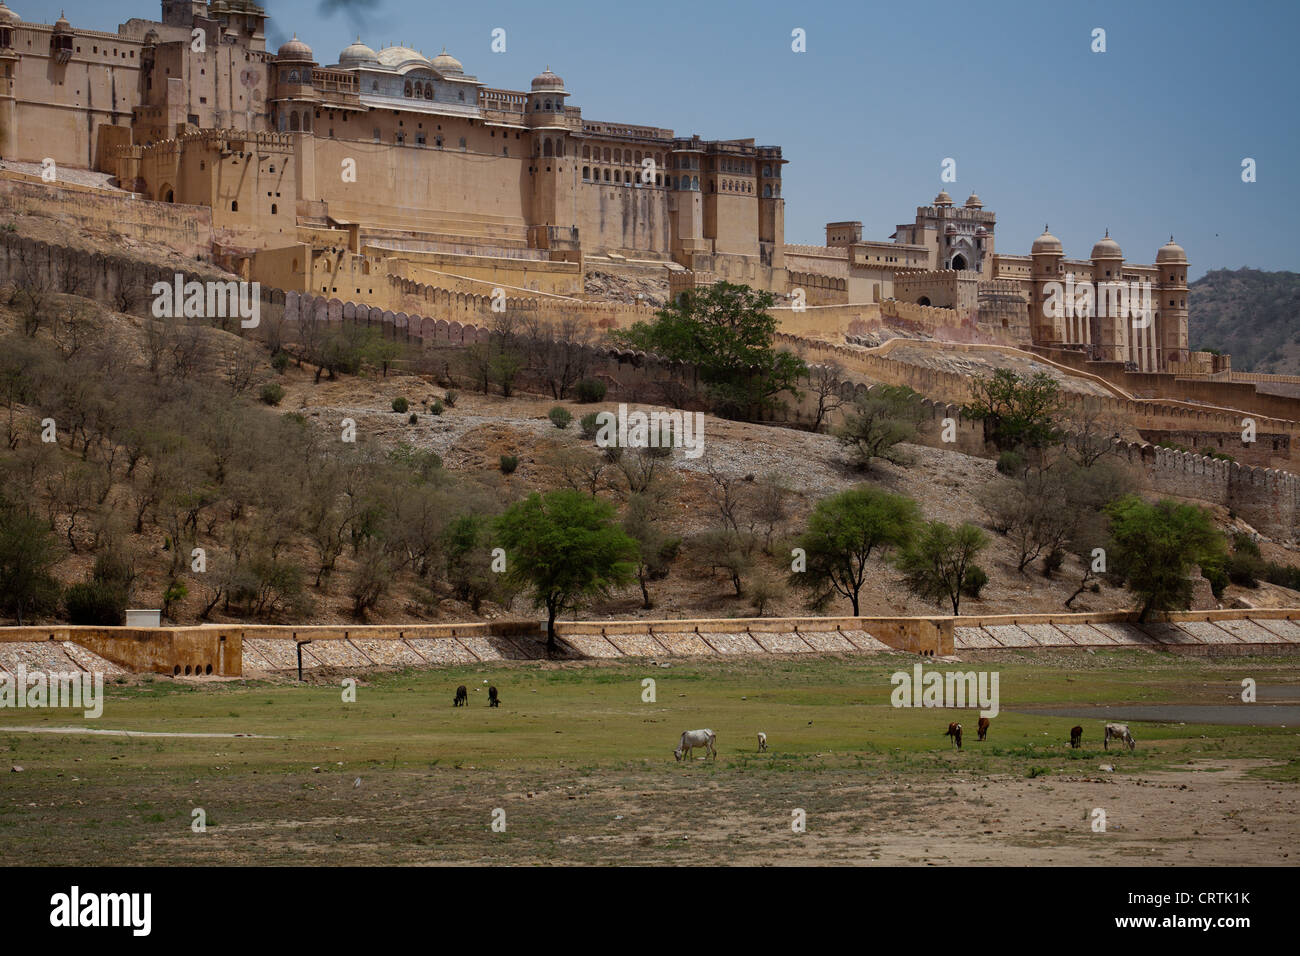 Agrfa Fort Jaipur, India Foto Stock